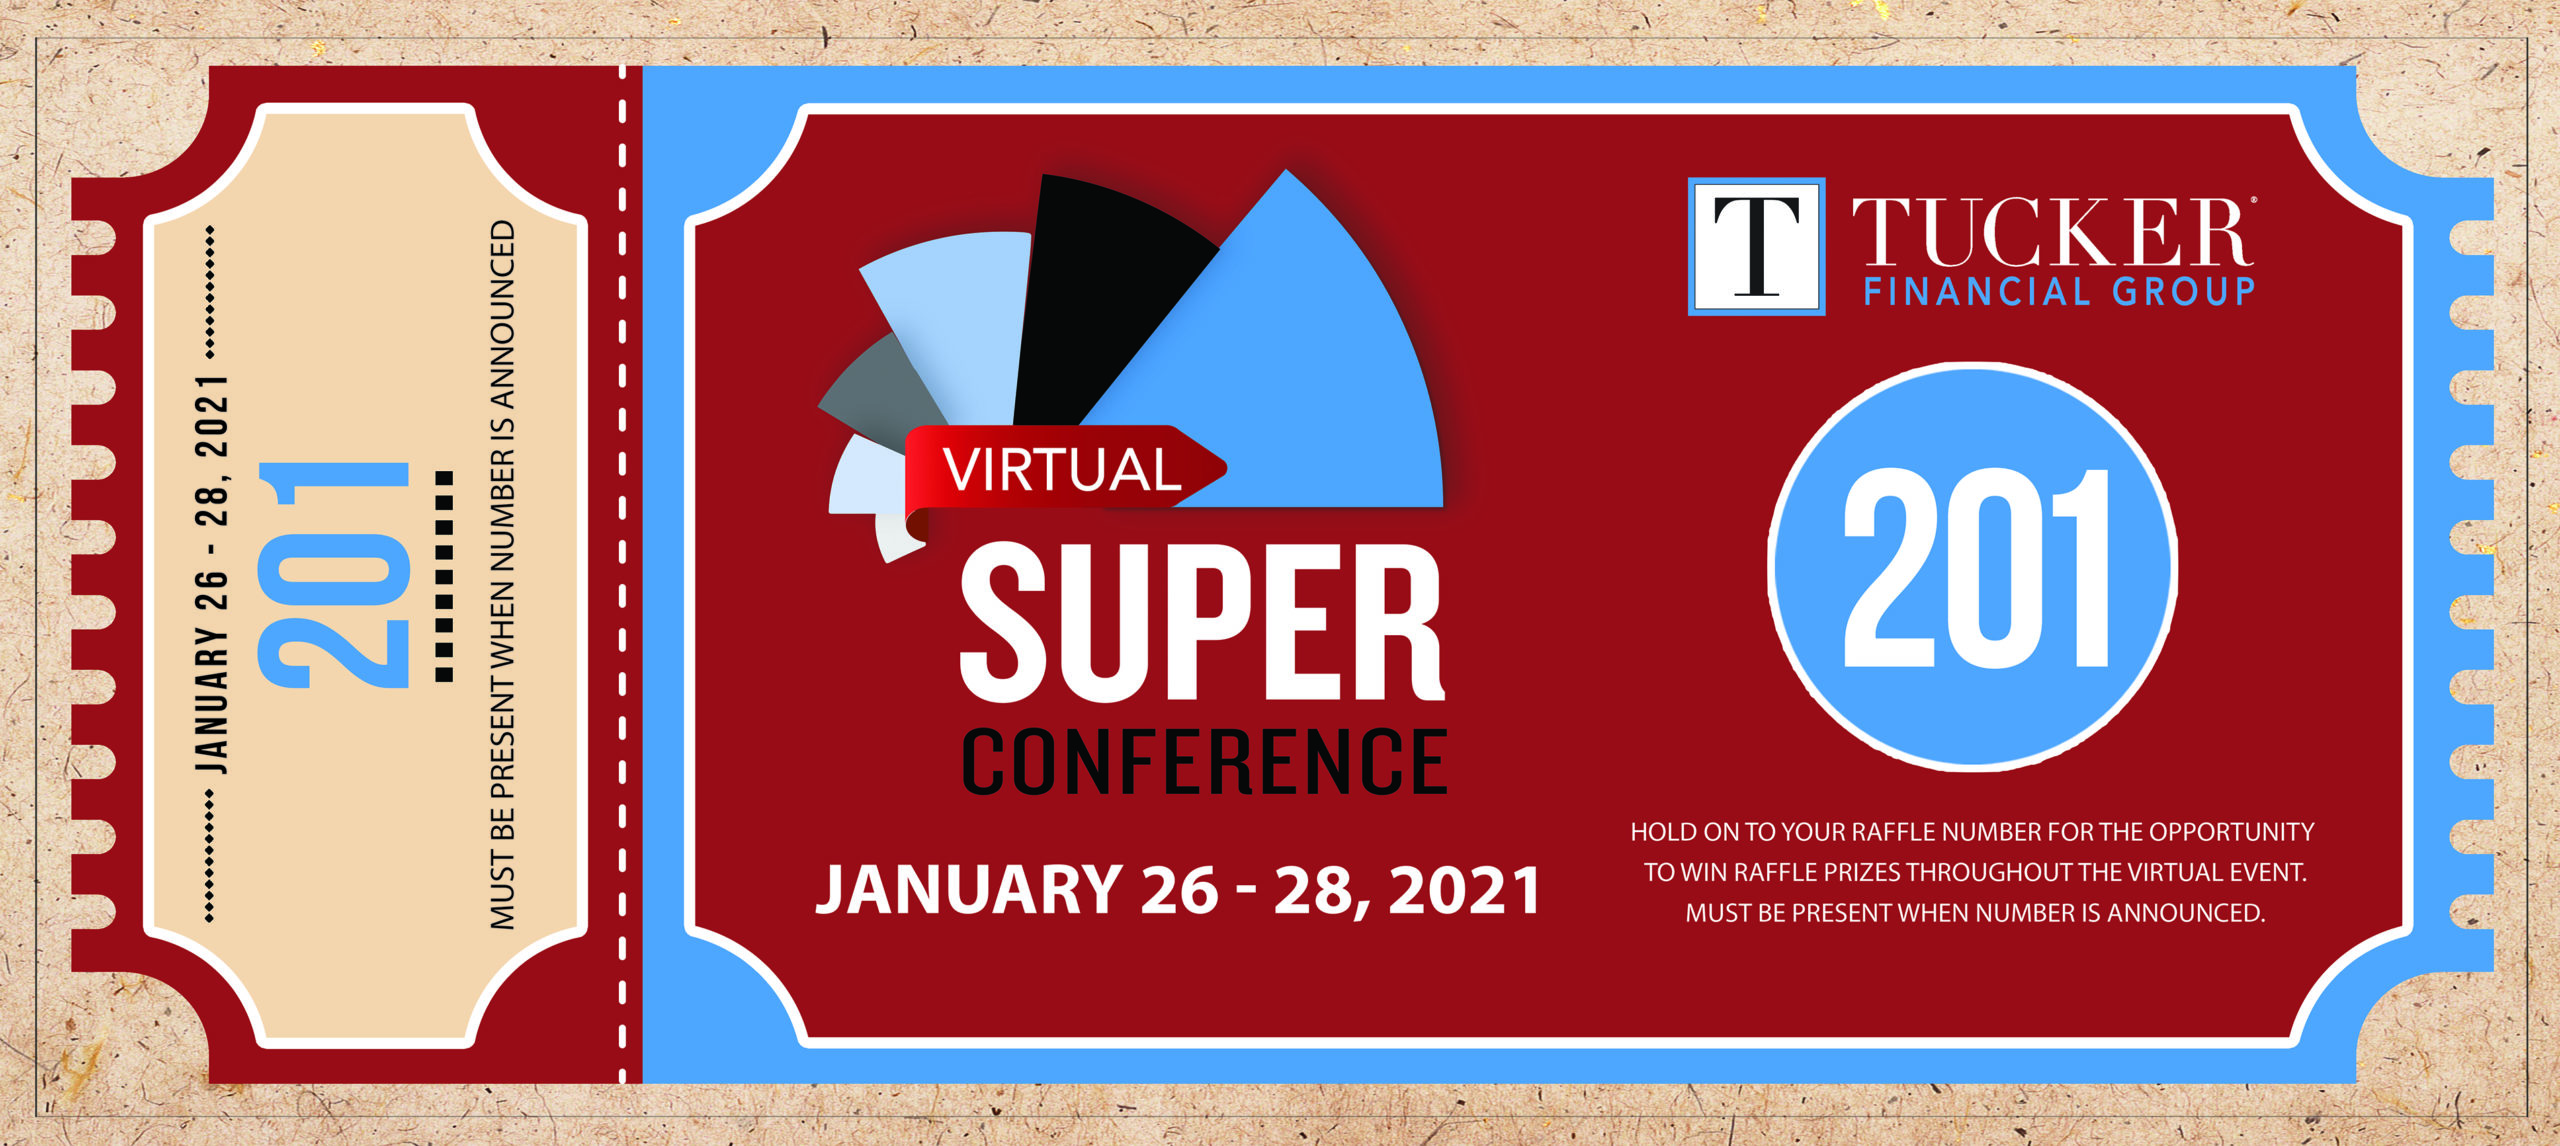 tucker-super-conference-2021-ticket